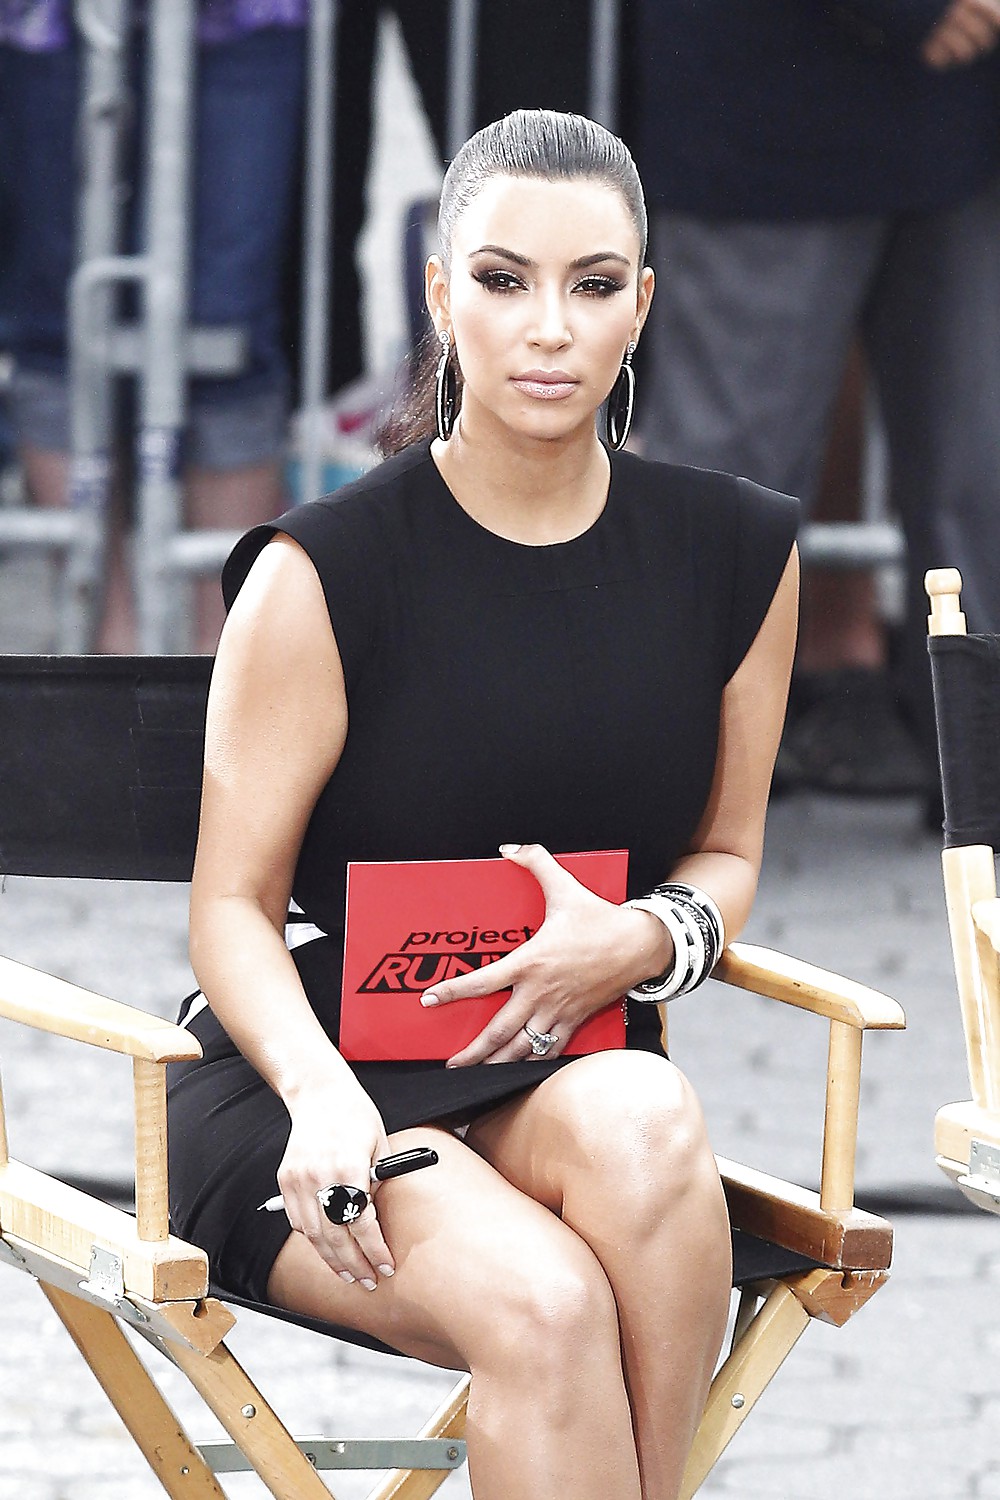 Kim Kardashian Panty Flash While Filming Project Runway #5409959